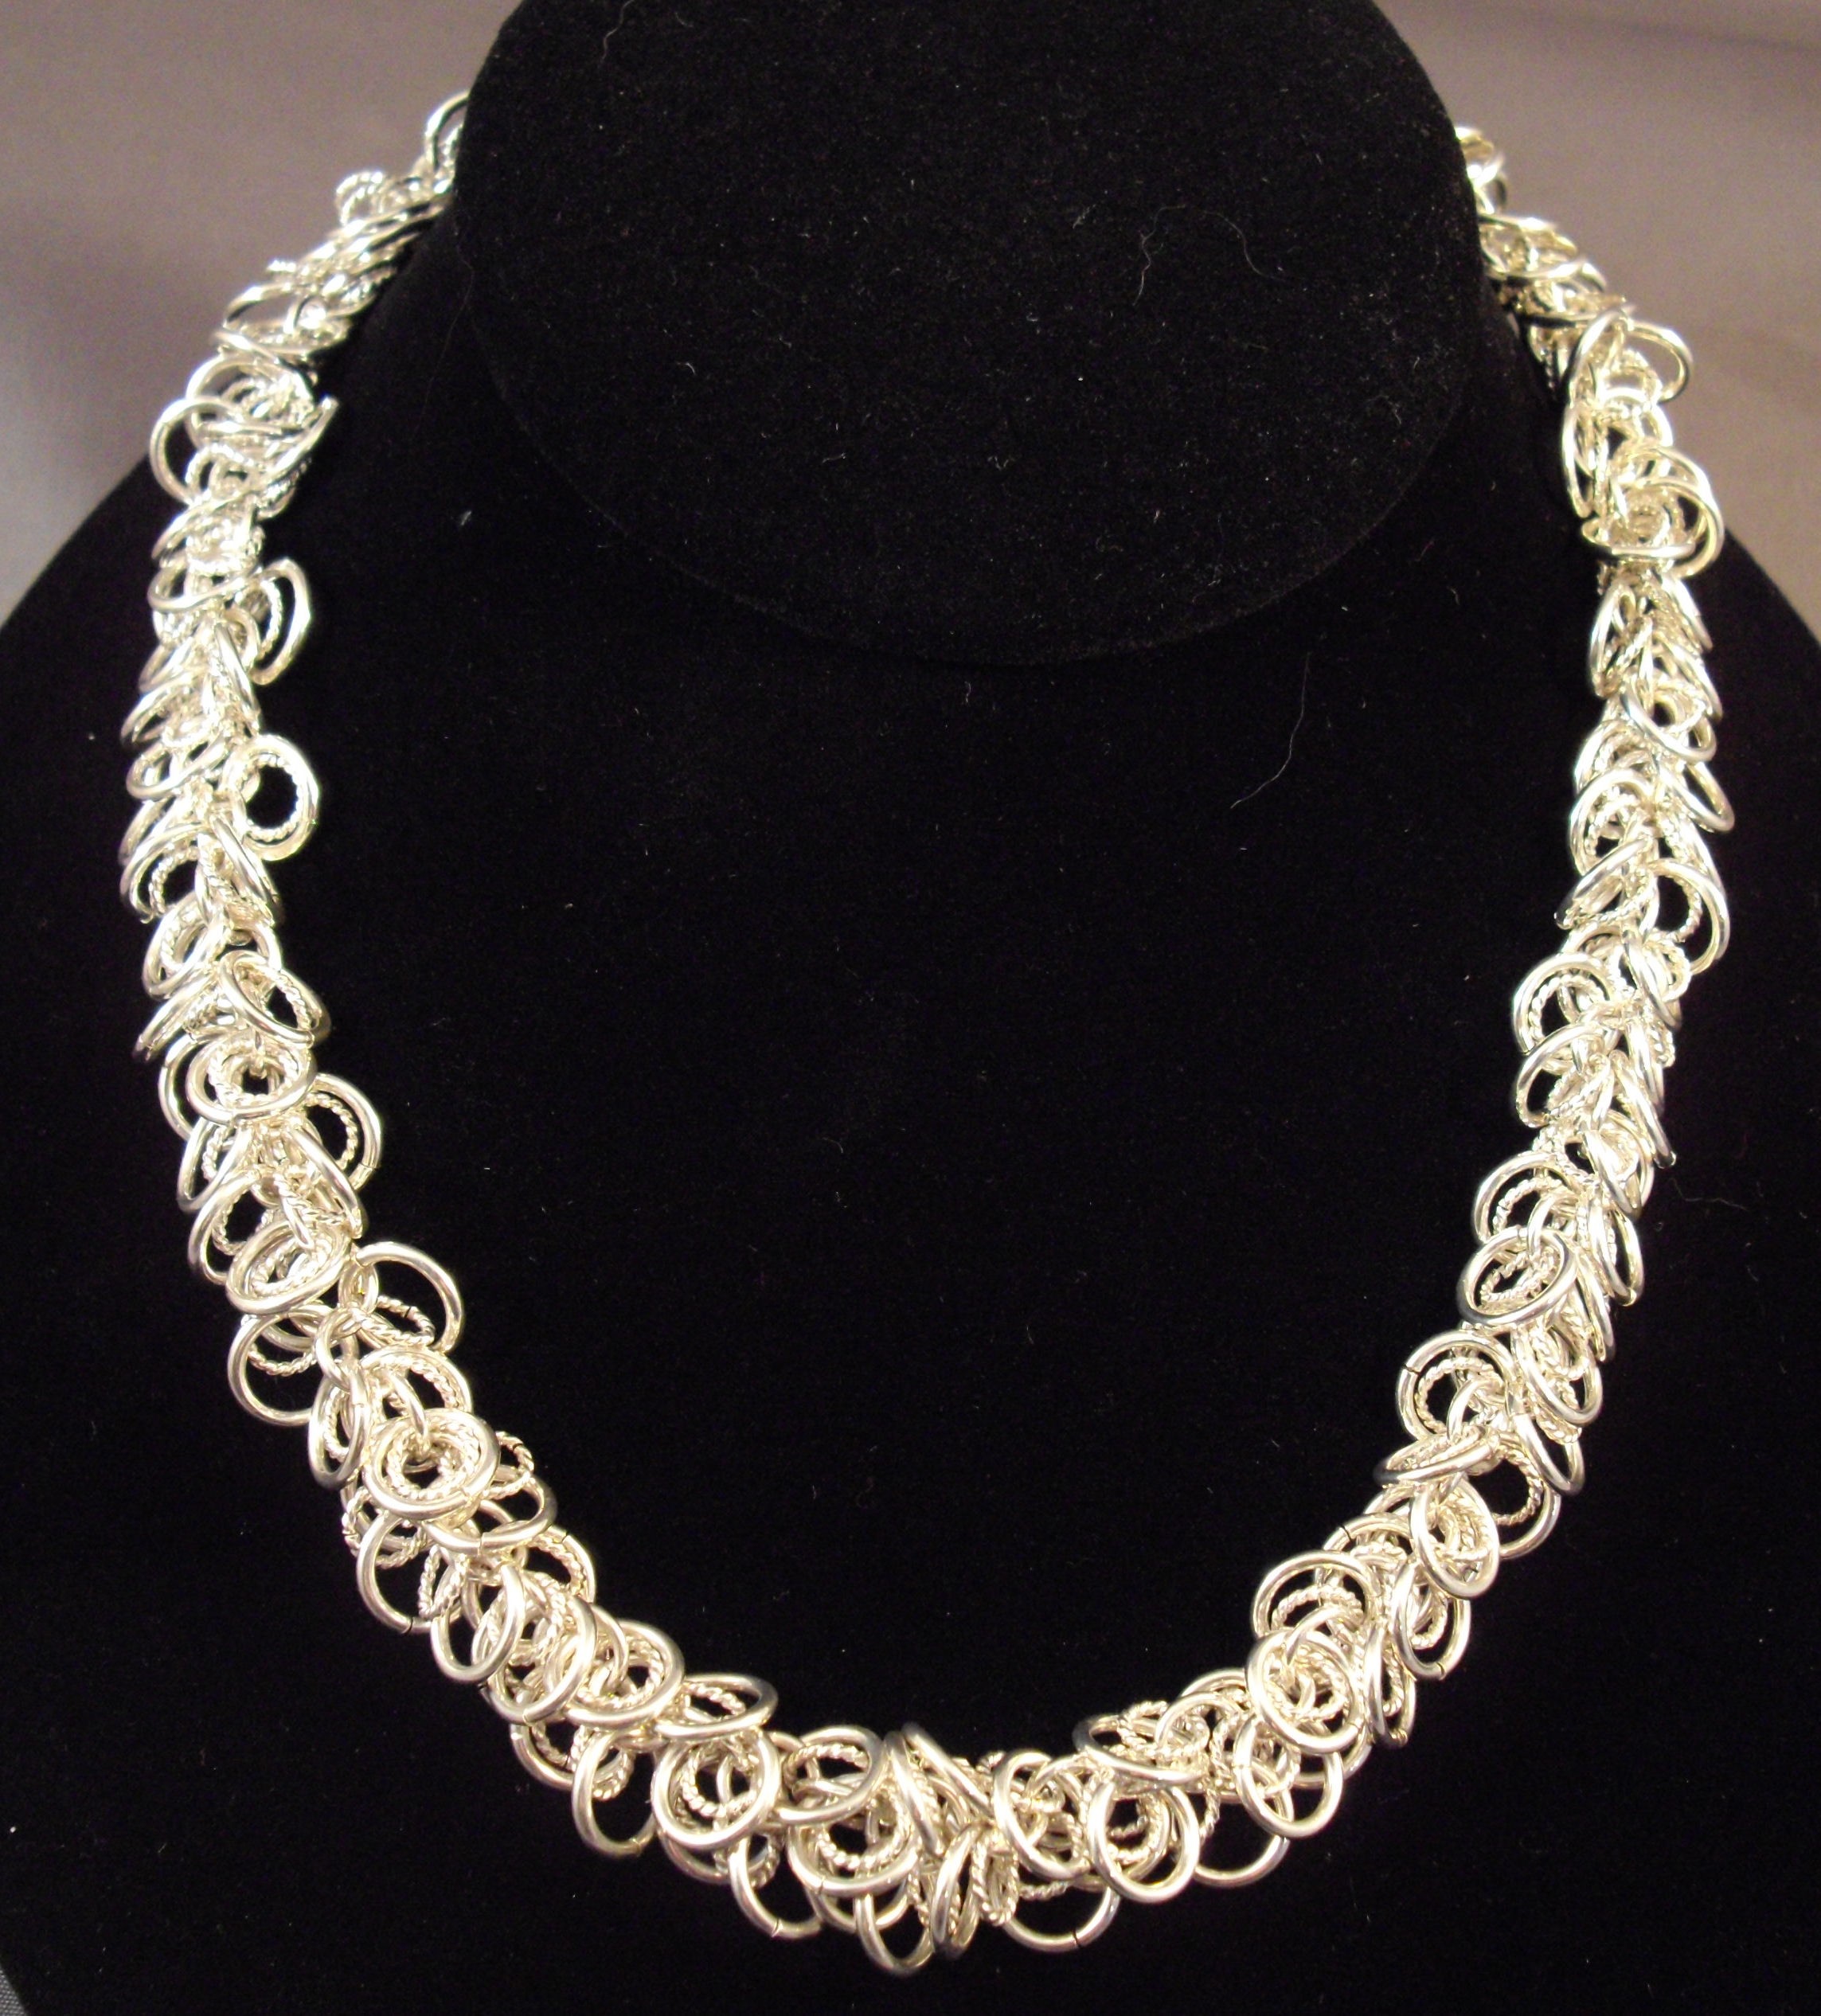 Sassy Swirl of Rings Necklace Kit